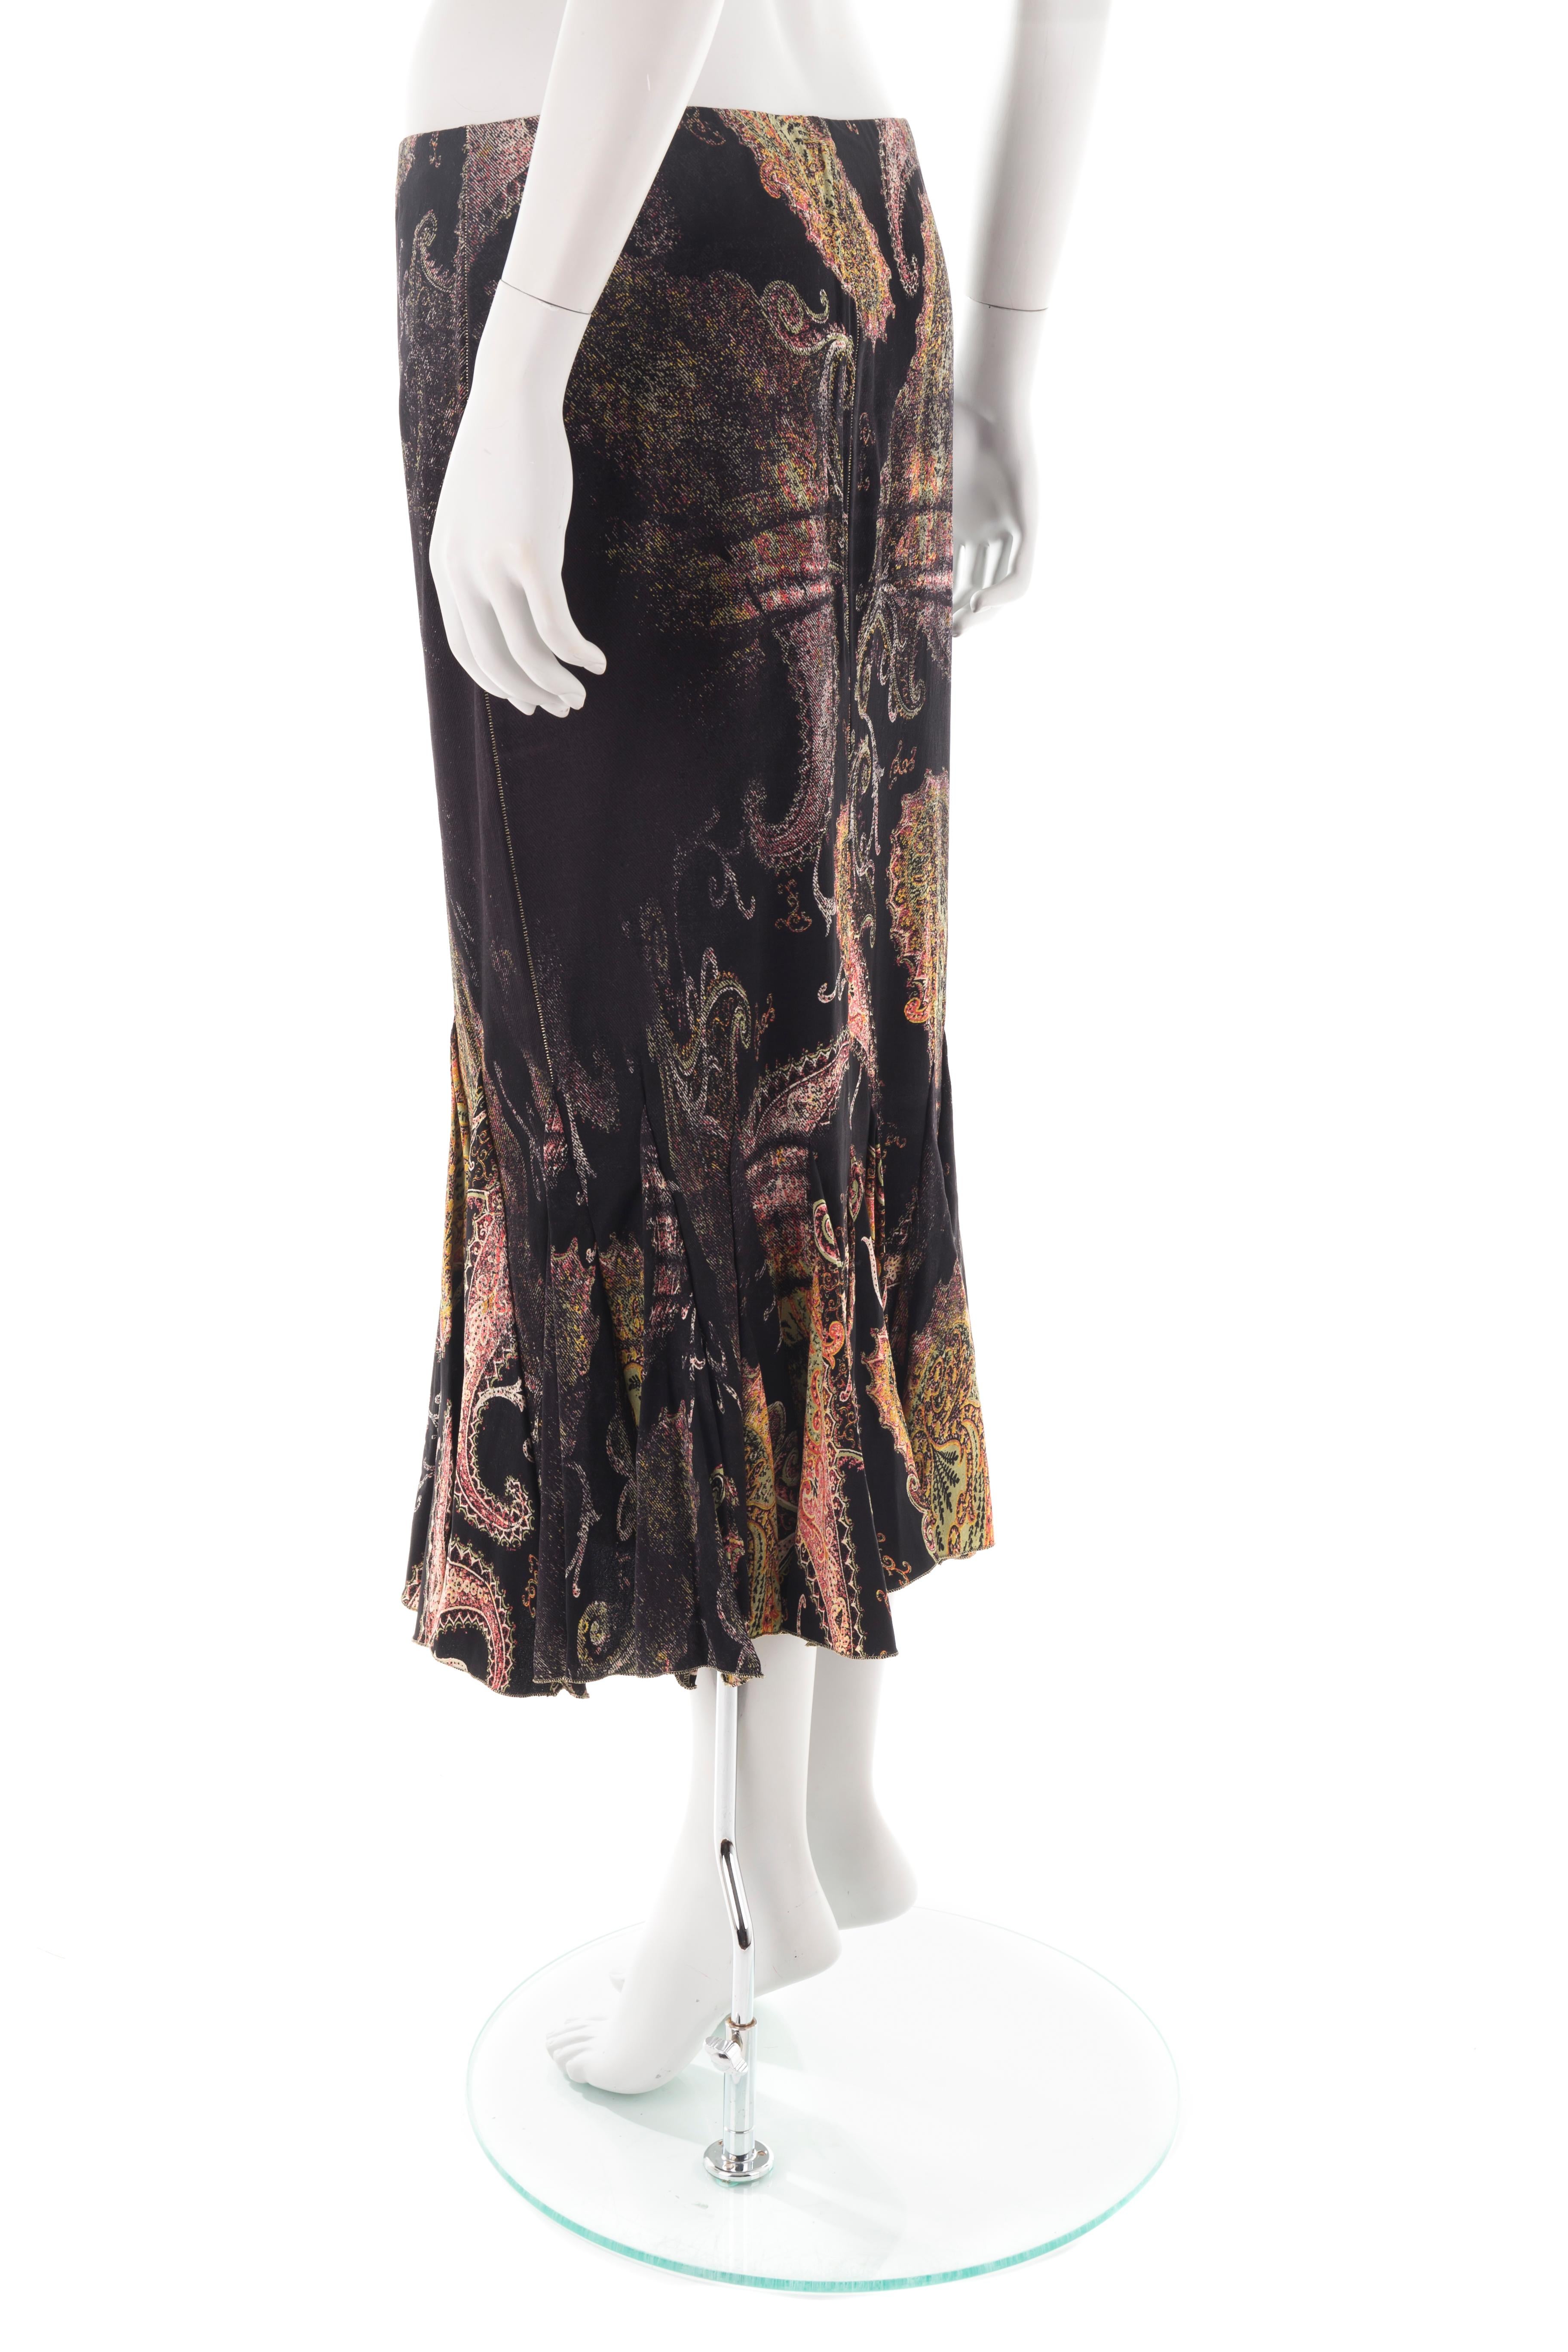 Women's Roberto Cavalli F/W 2002 black and brown paisley godet skirt